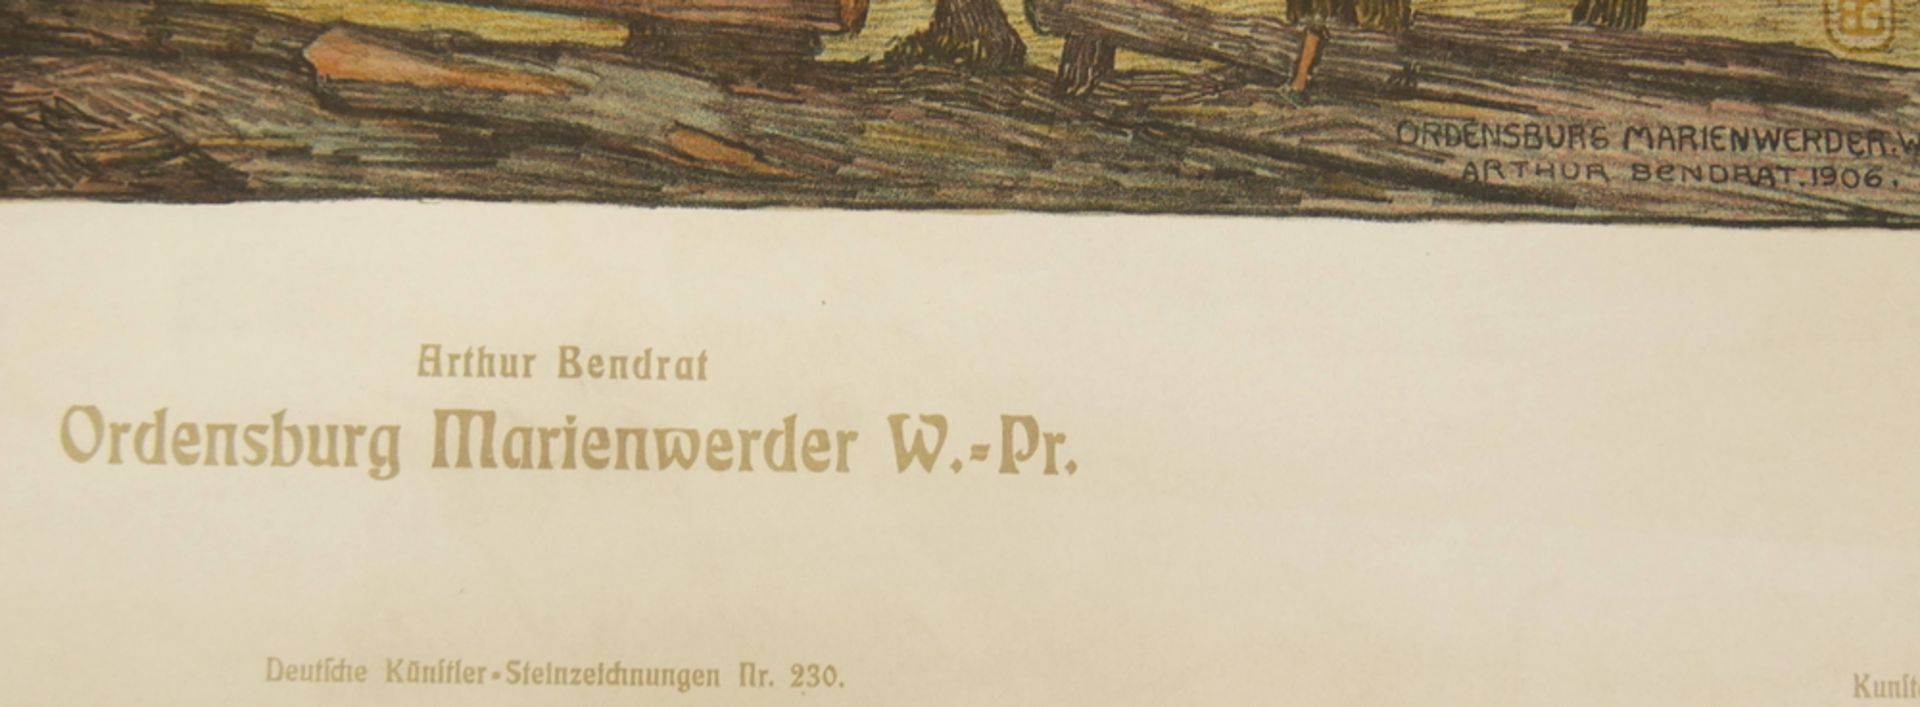 Farblithografie "Ordensburg Marienwerder" Arthur Bendrat 1872 - 1914. Maße ca. 44 x 57 cm - Bild 2 aus 2